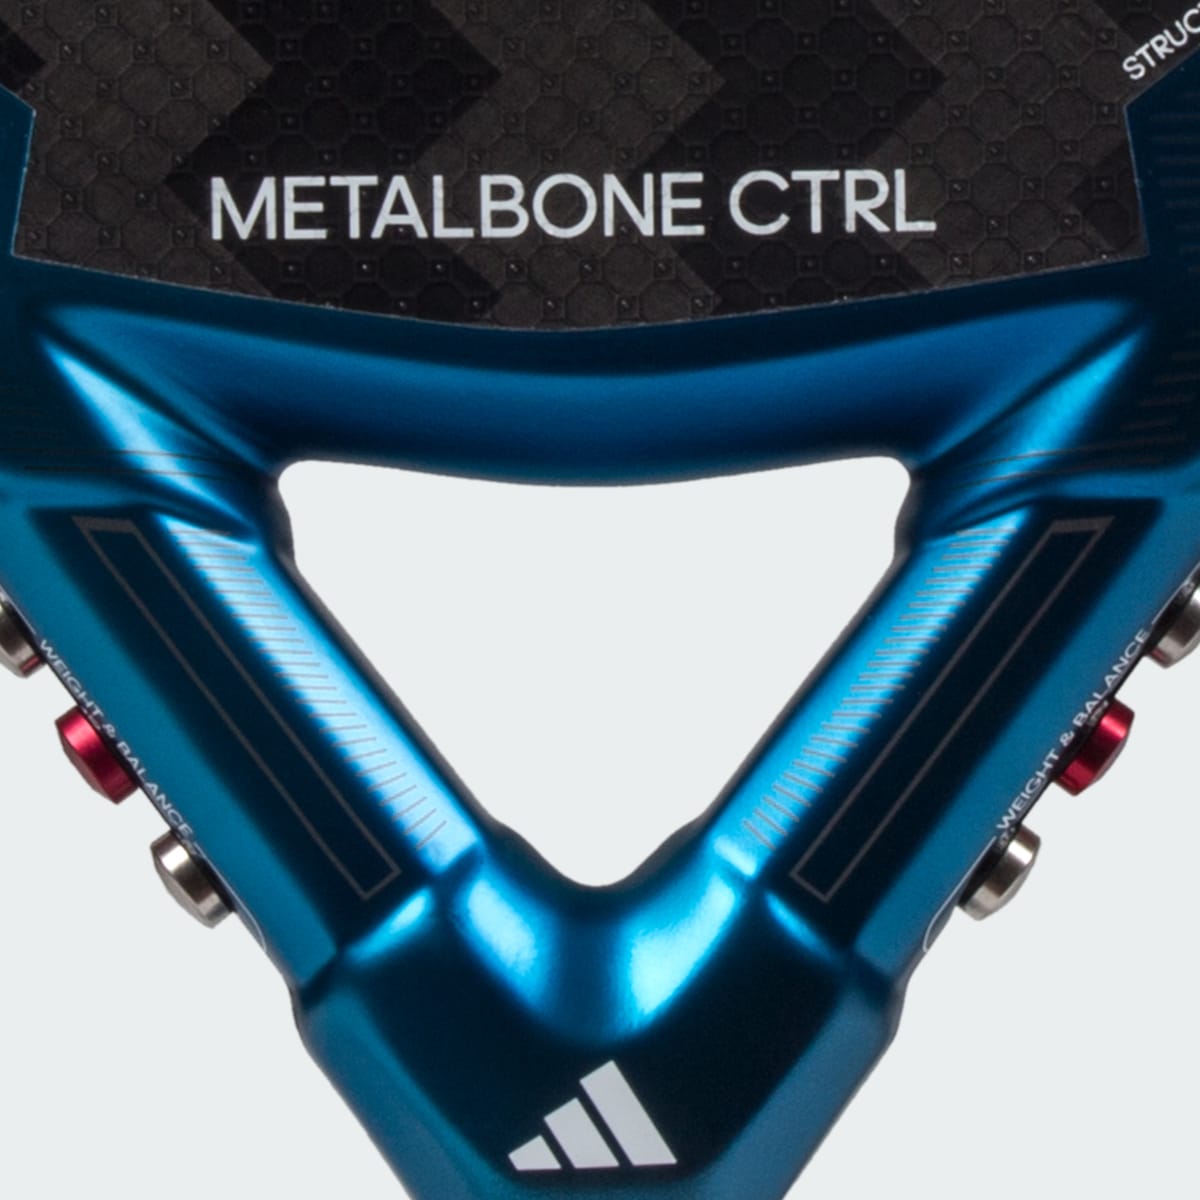 Adidas Metalbone CTRL 3.3 Padel-Schläger. 5